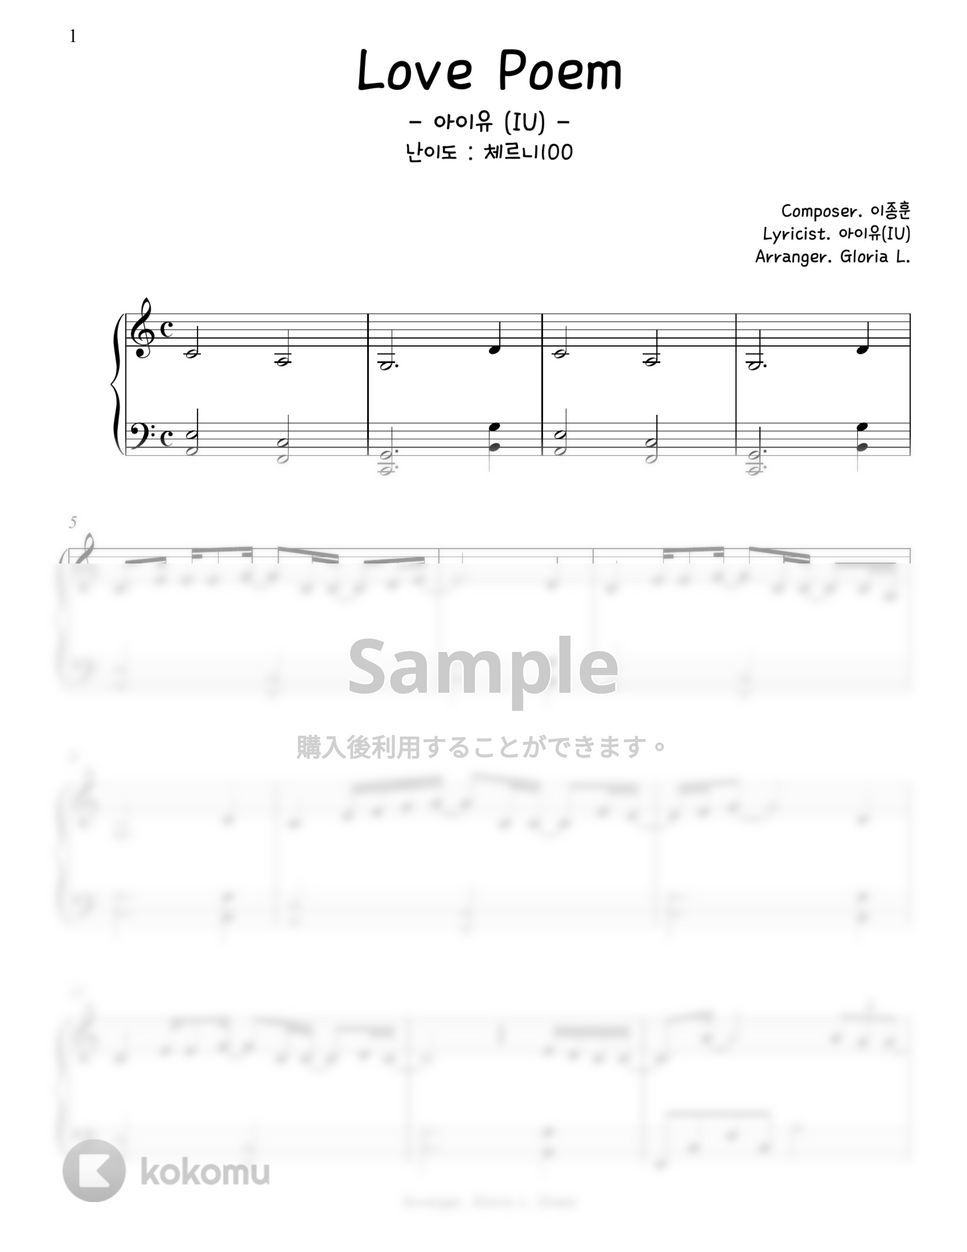 IU - Love Poem (難易度:チェルニー100) by Gloria L.